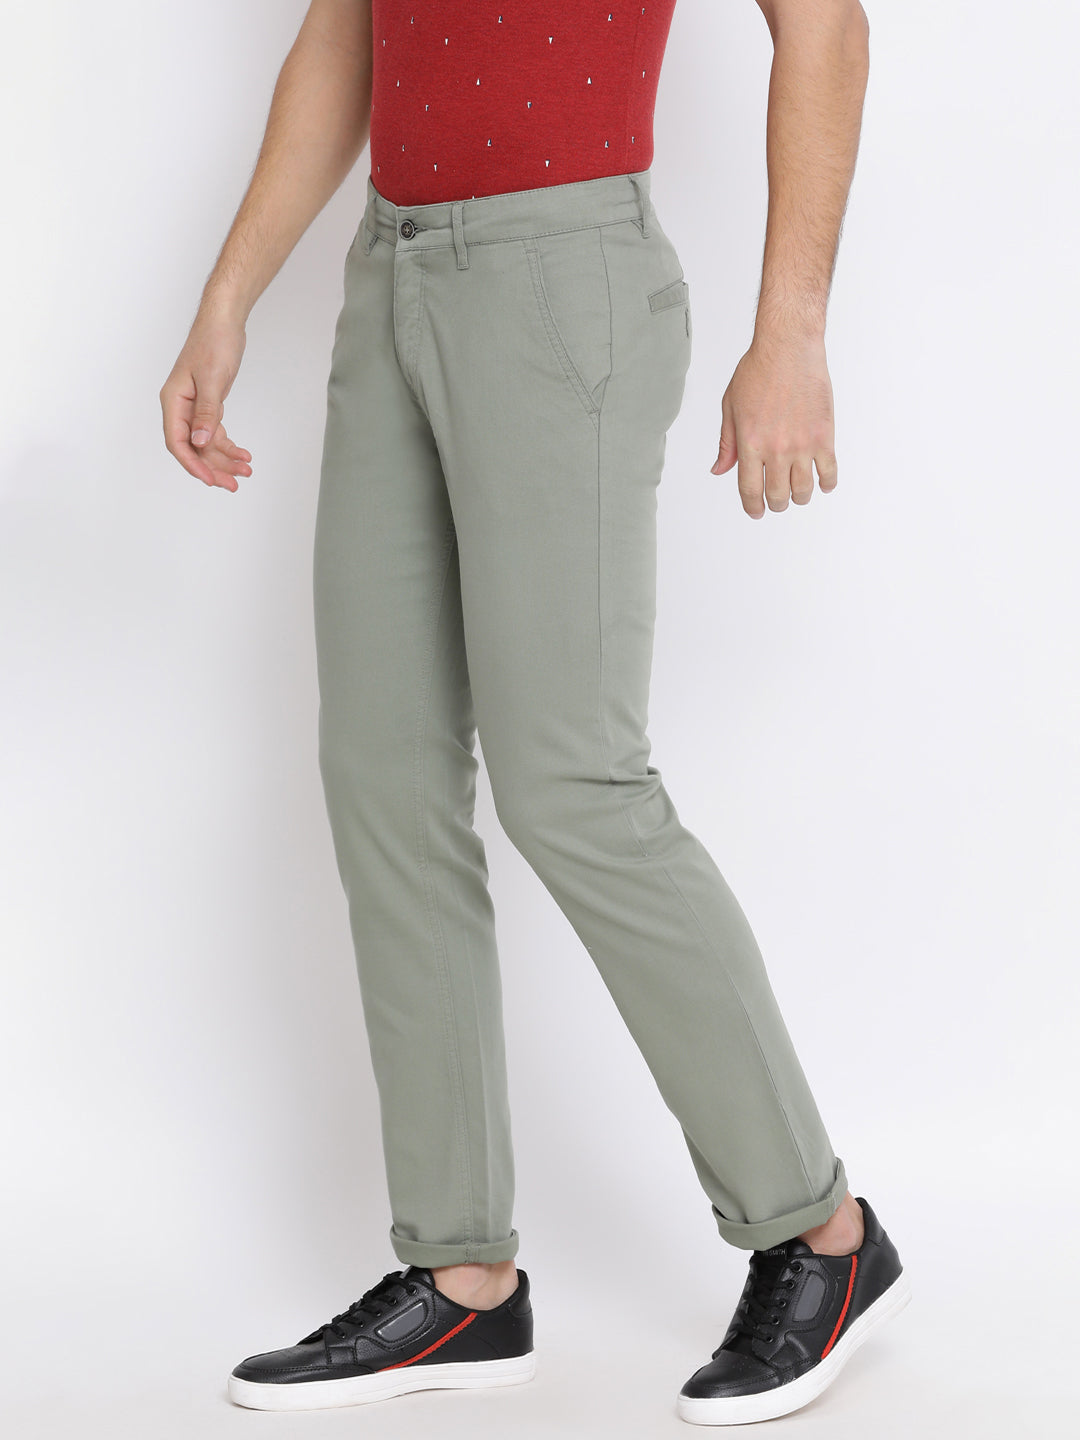 Grey Slim Fit Trousers - Men Trousers